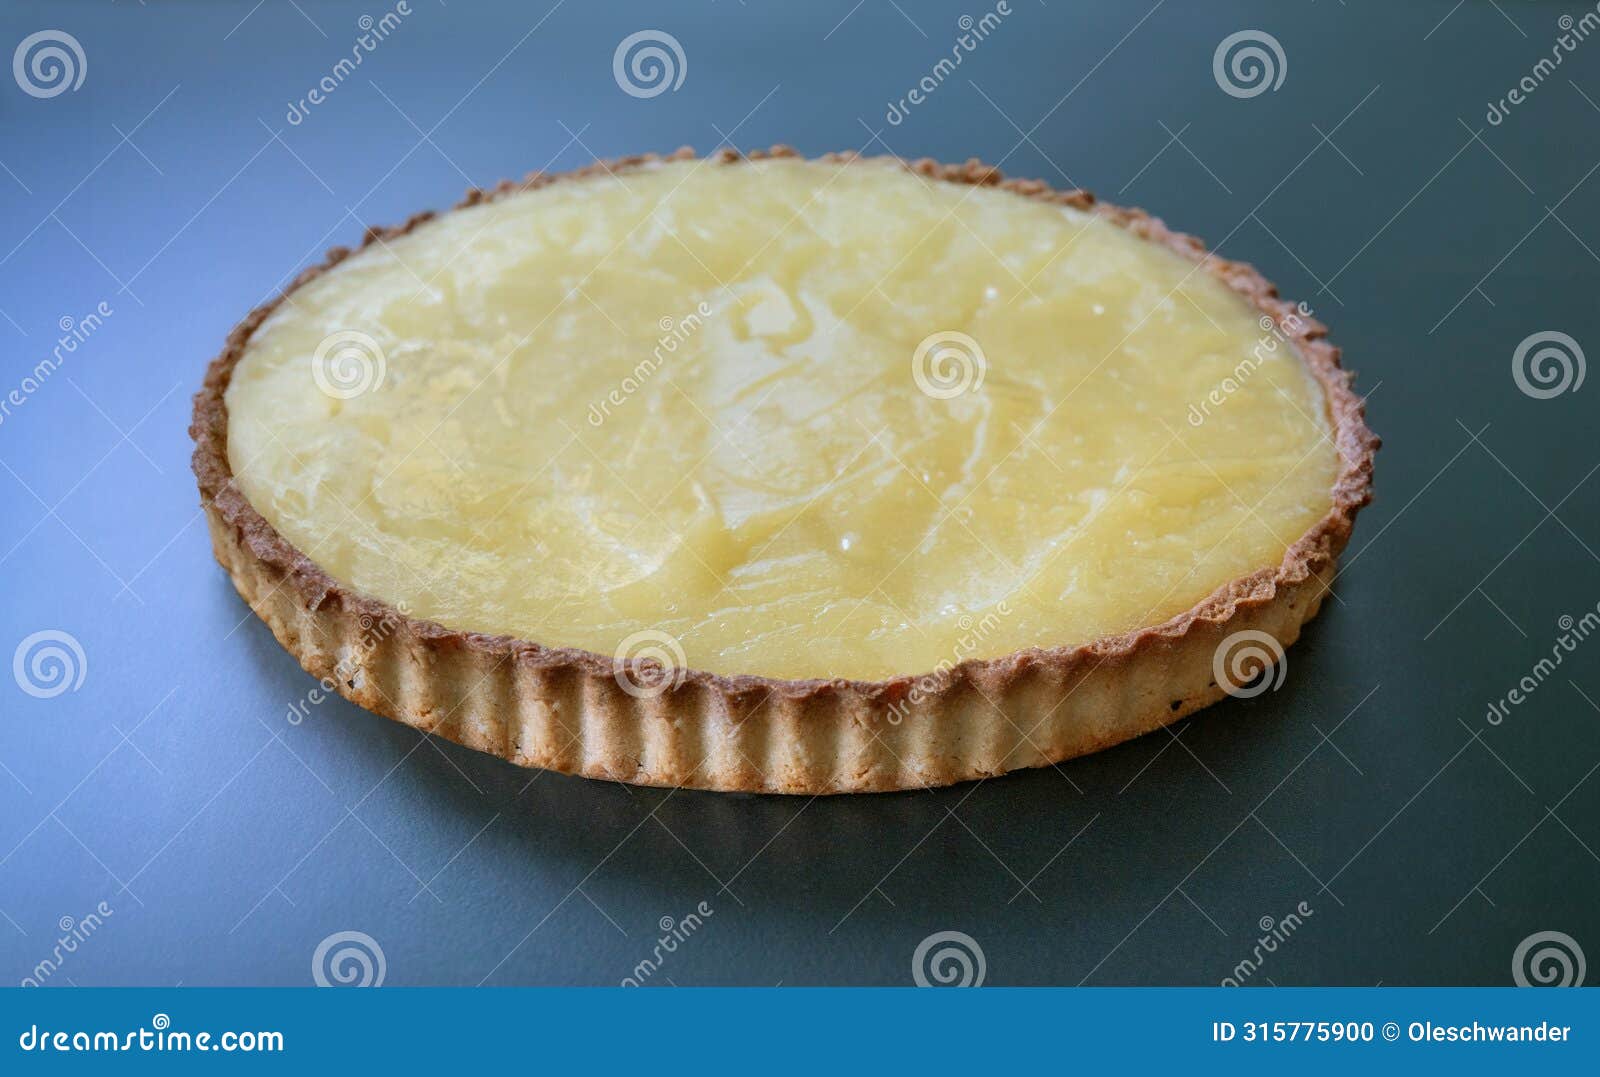 homemade shortcrust pastry lemon pie on turquoise background.